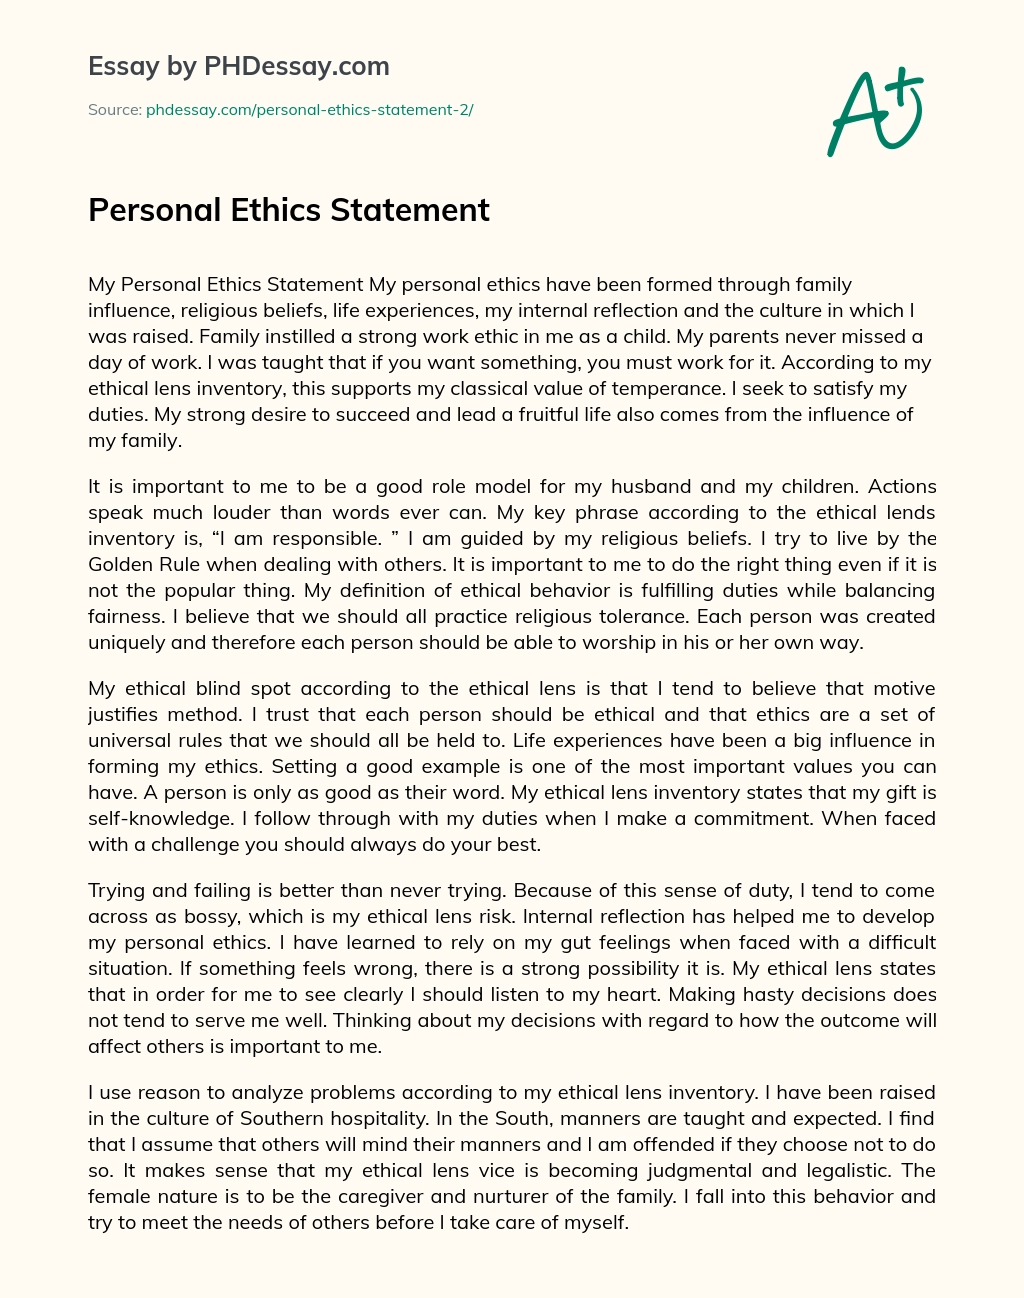 Personal Ethics Statement essay